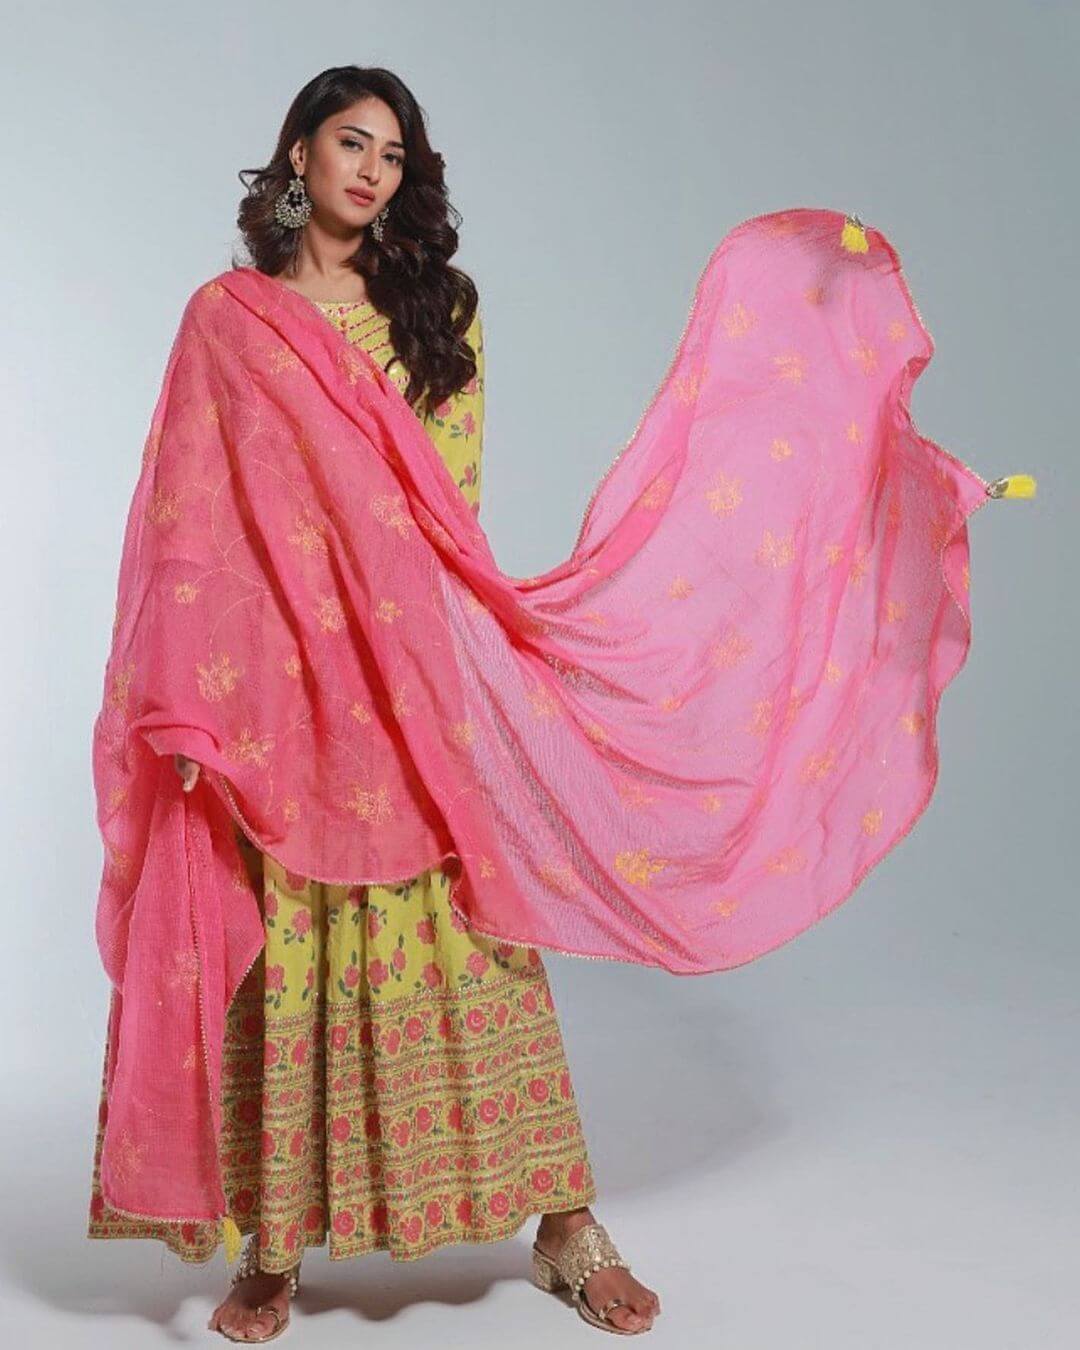 Erica Fernandes Desi Look In Yellow And Pink Kurta Set